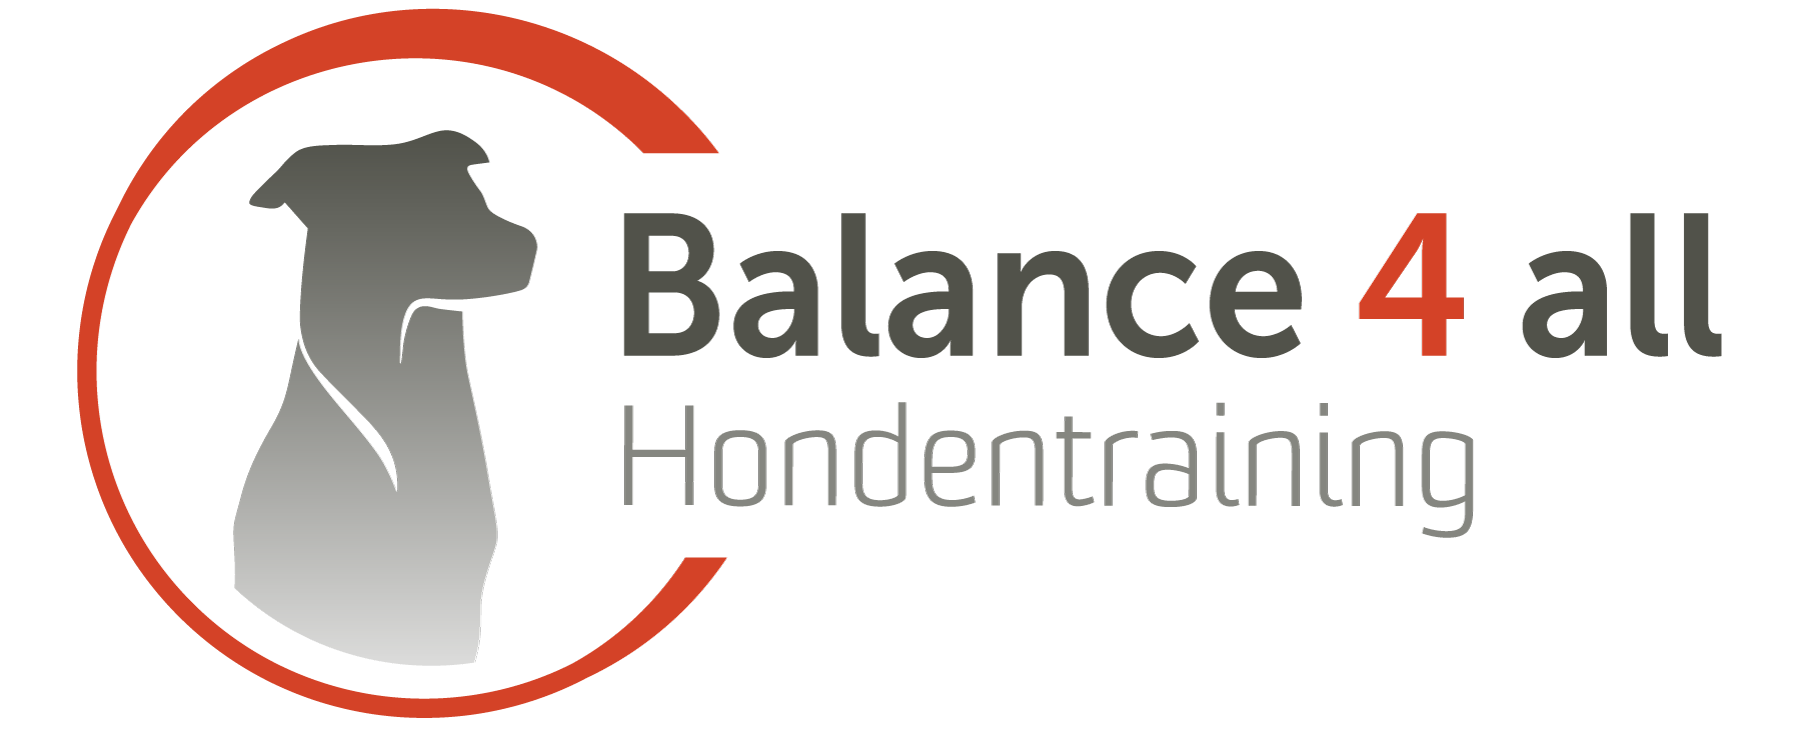 Balance4all Hondentraining